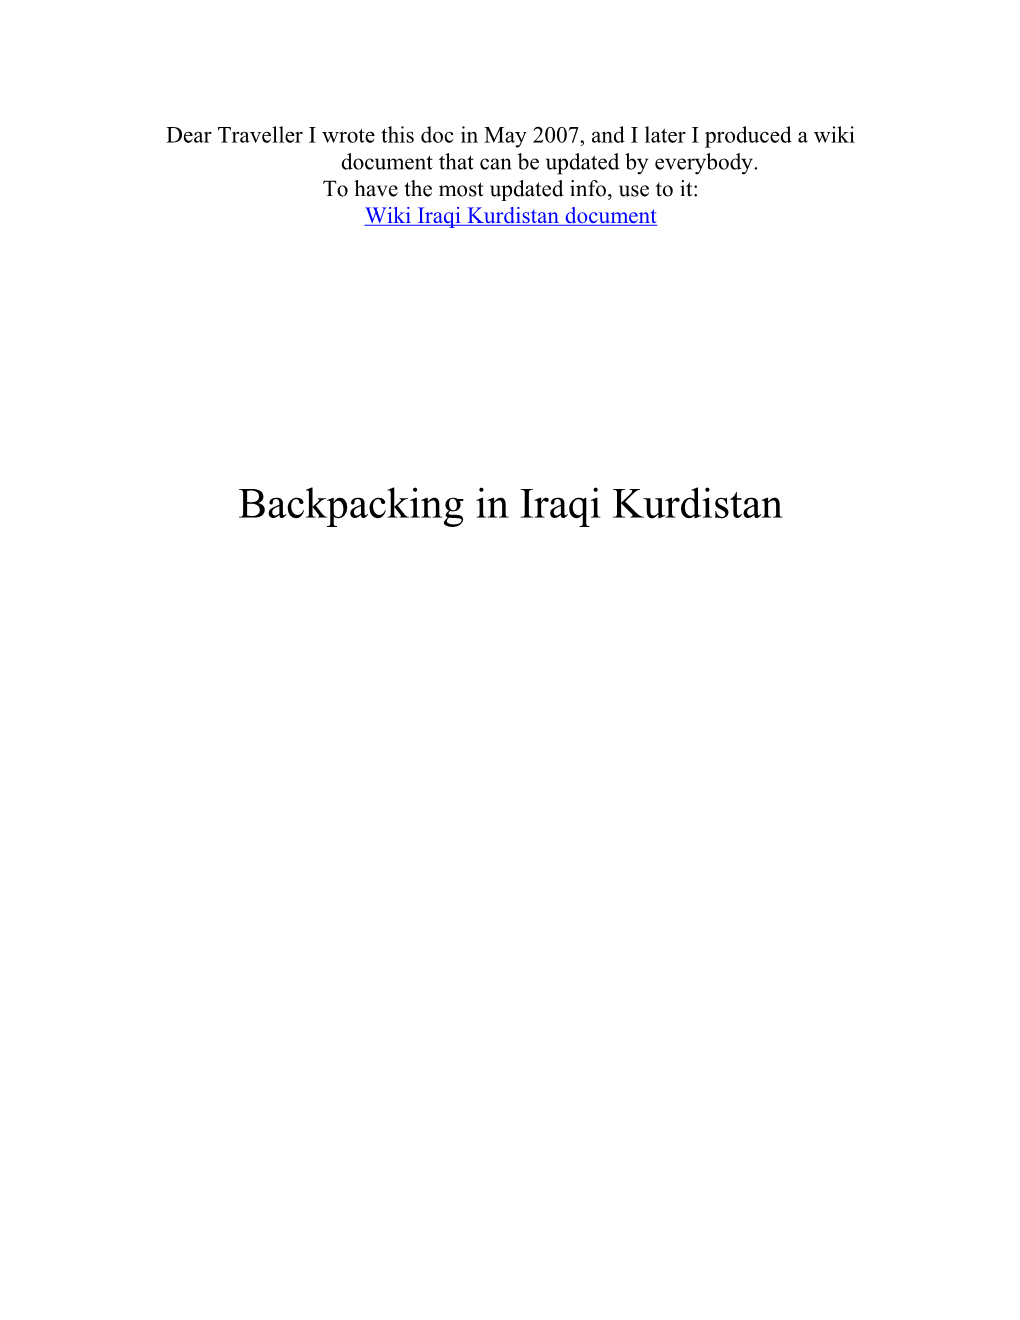 Backpacking in Iraqi Kurdistan